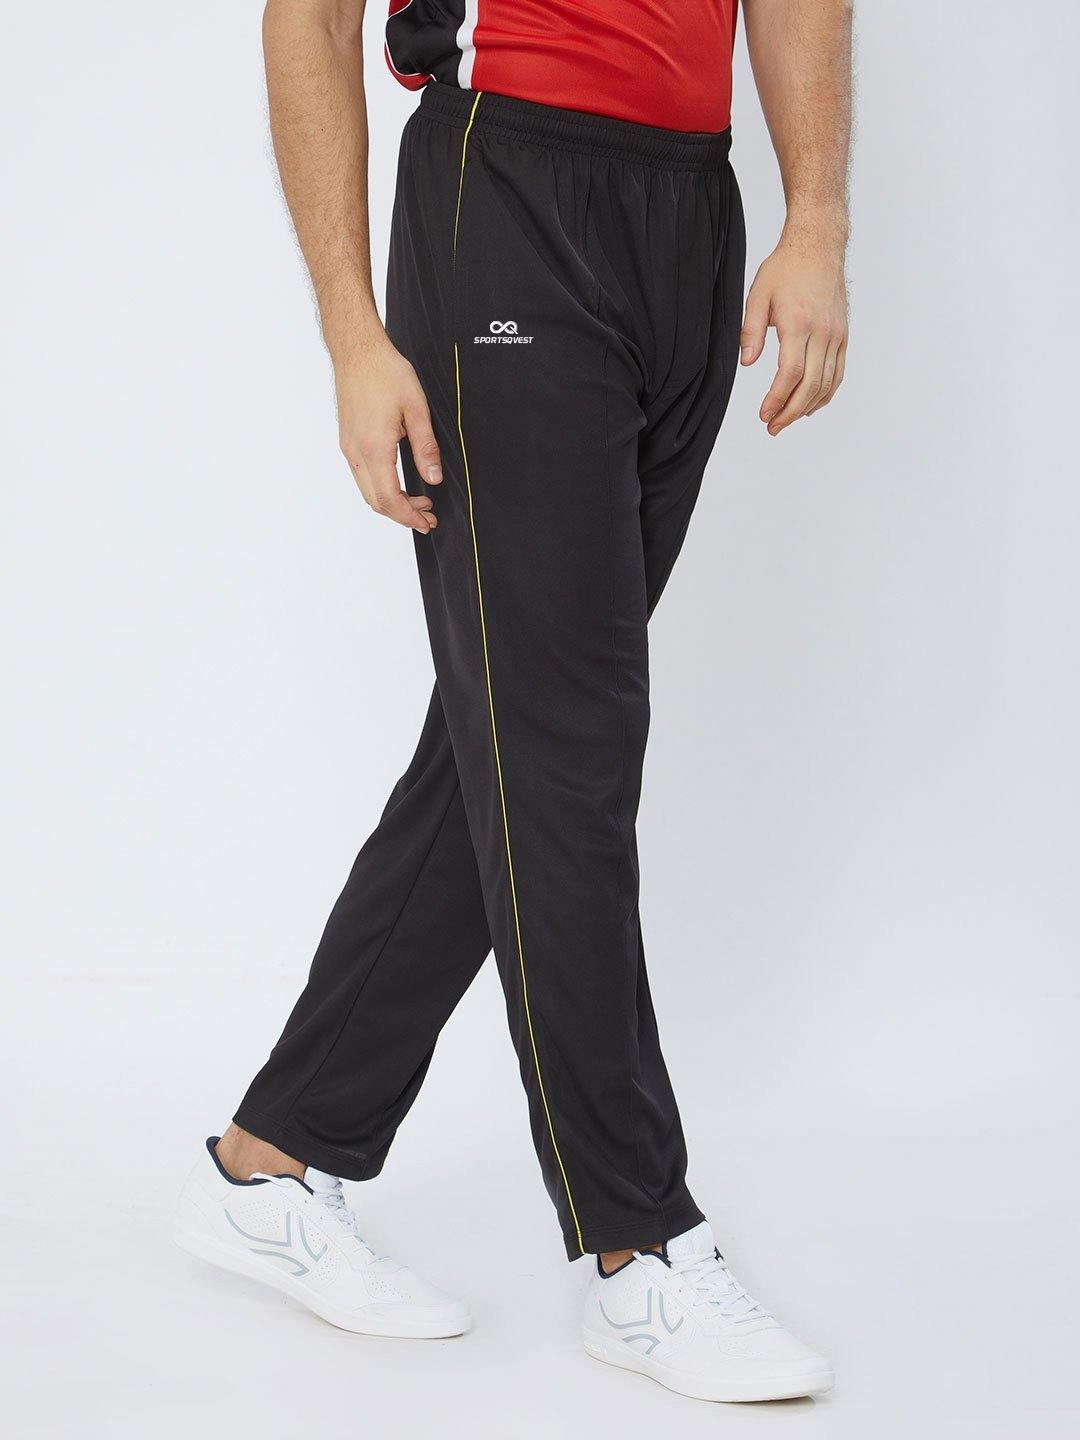 Cricket Trouser - Yashi Brand » Yashi Sports Inc